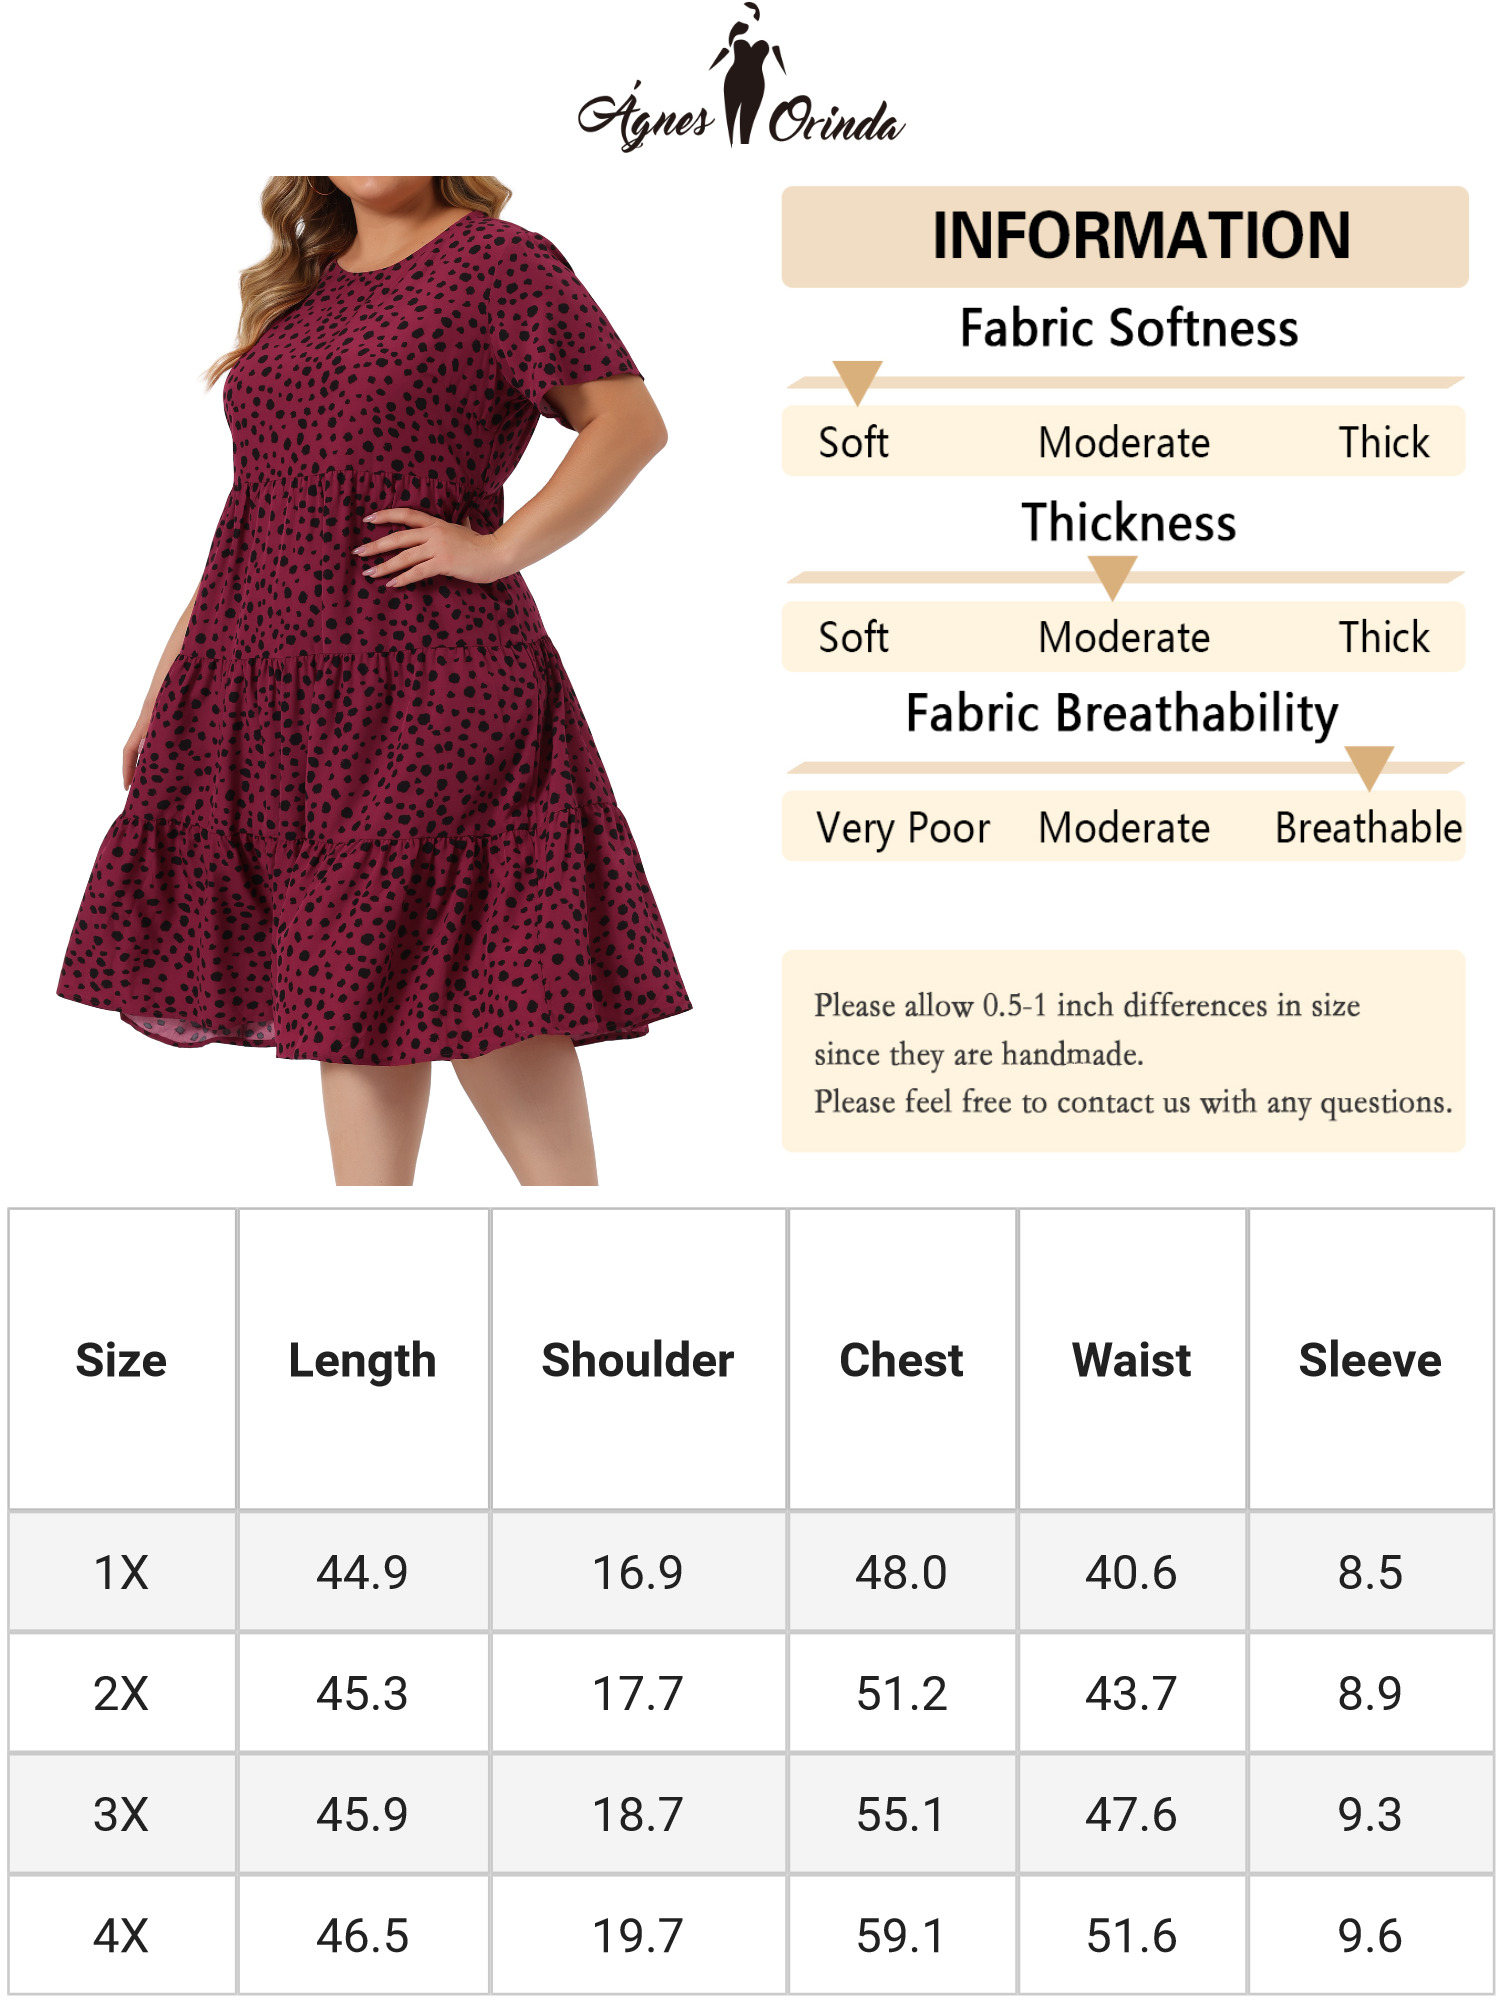 Unique Bargains Plus Size Polka Dots Dress for Women Short Sleeve Midi Layered Dresses